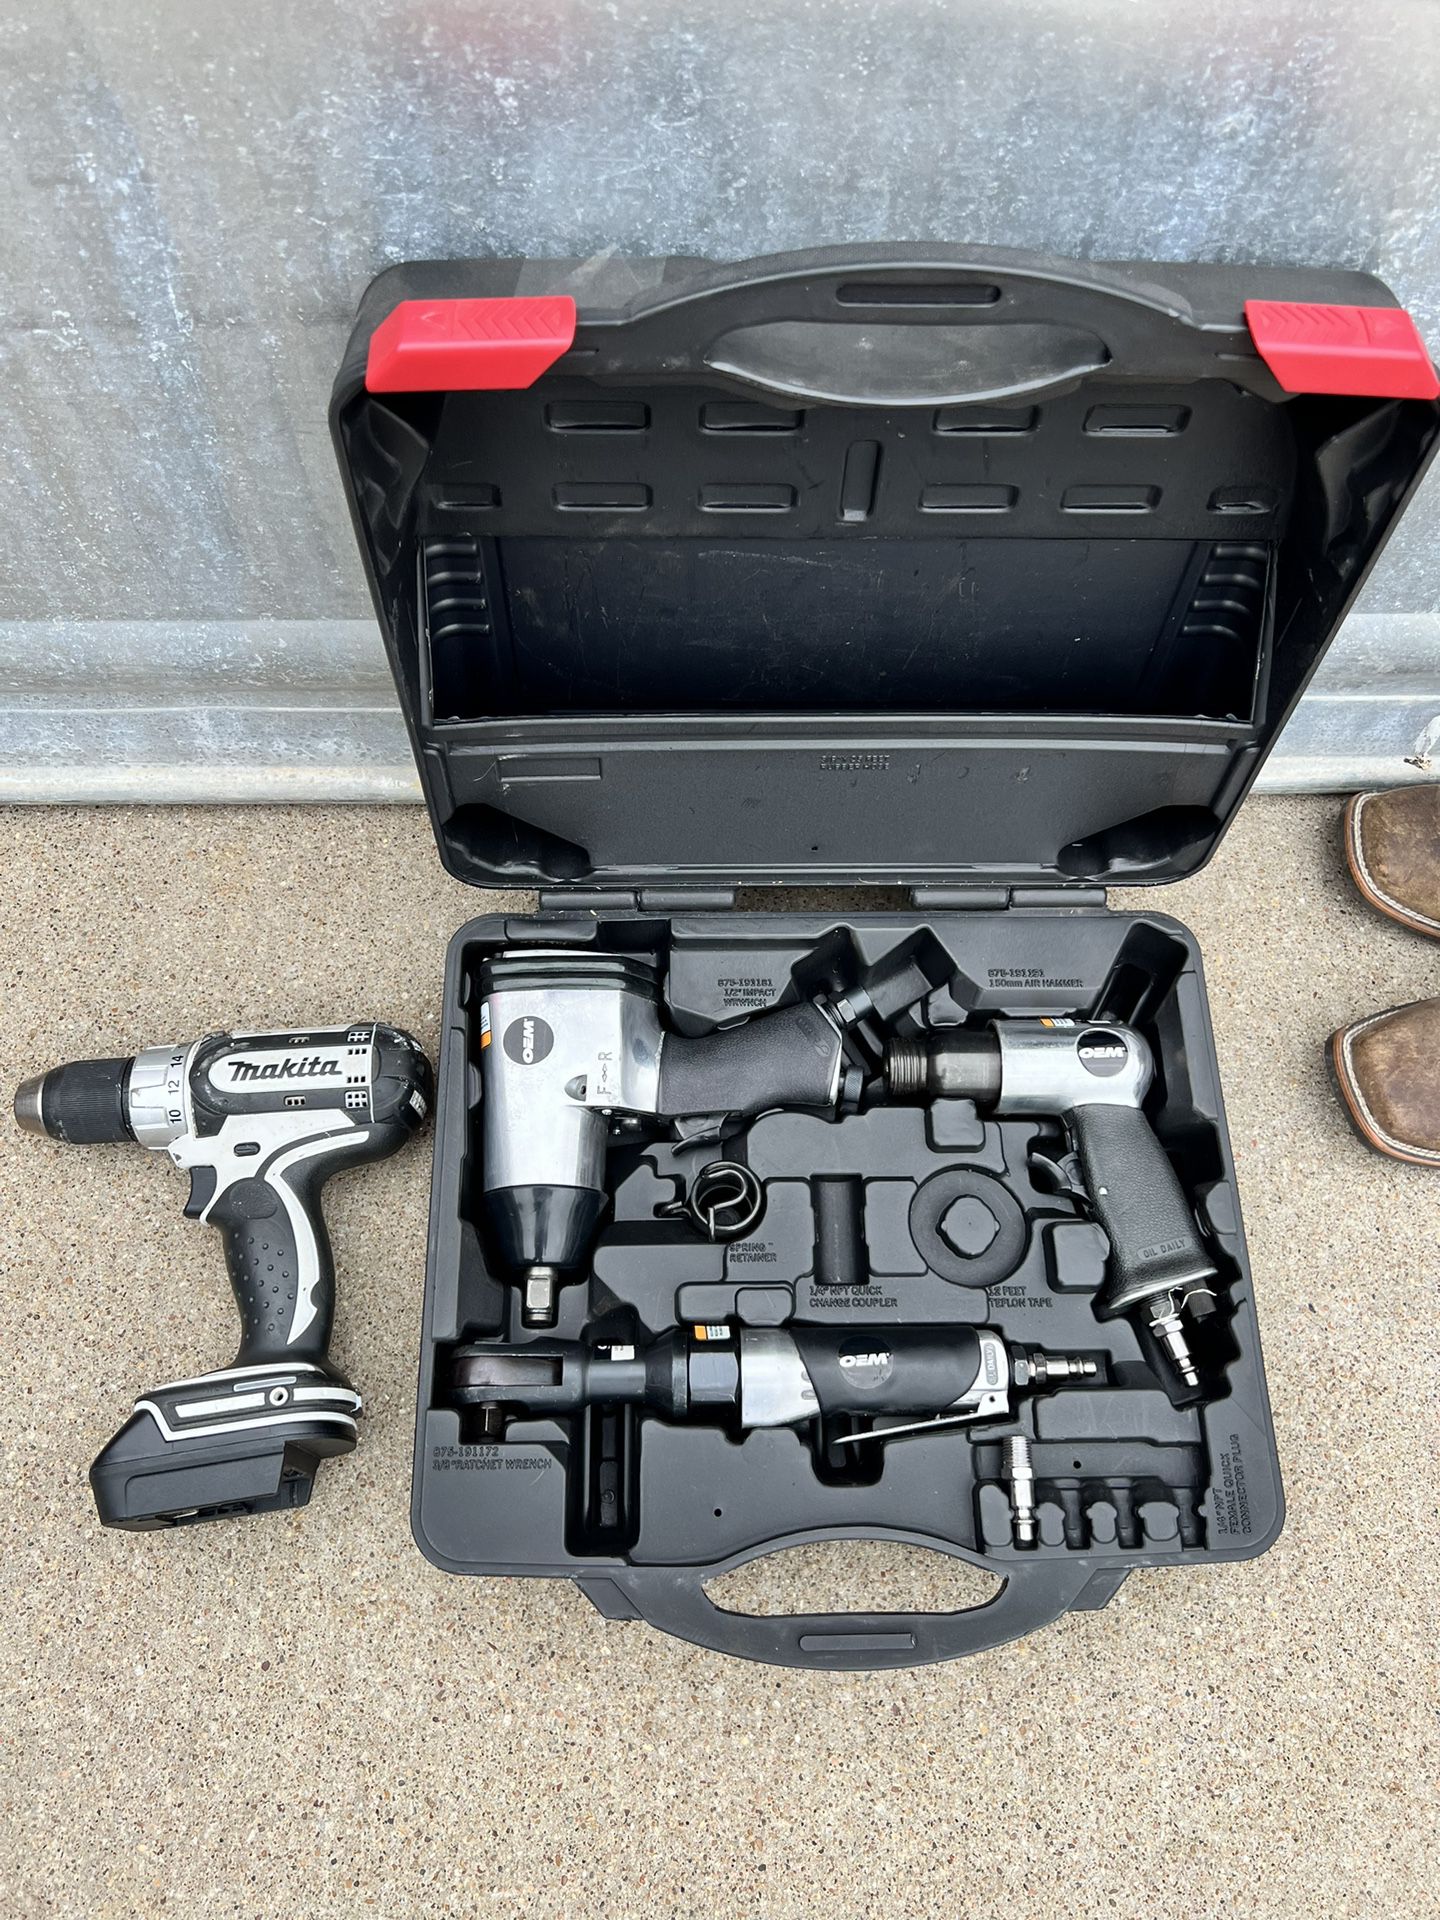 OEM Air Tool Kit And Makita Drill